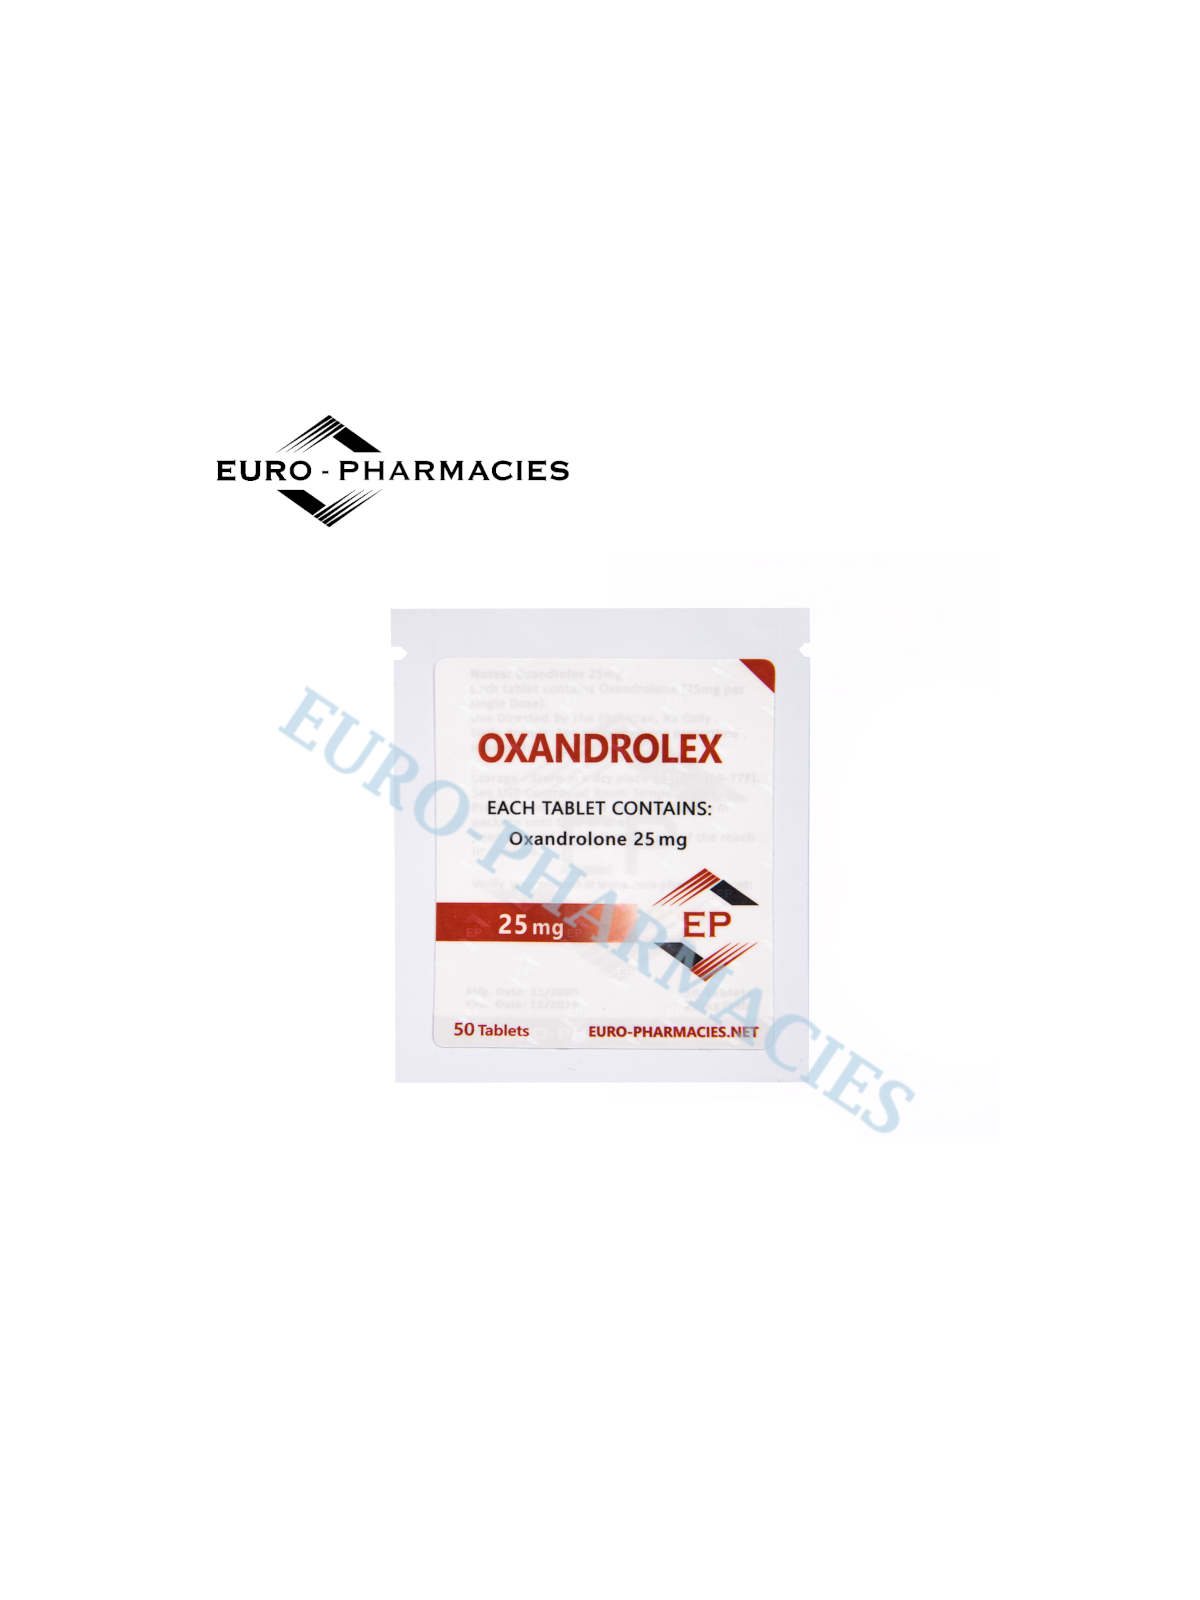 Oxandrolex 25 (Anavar) - 25mg/tab, 50 pills/bag - Euro-Pharmacies - USA